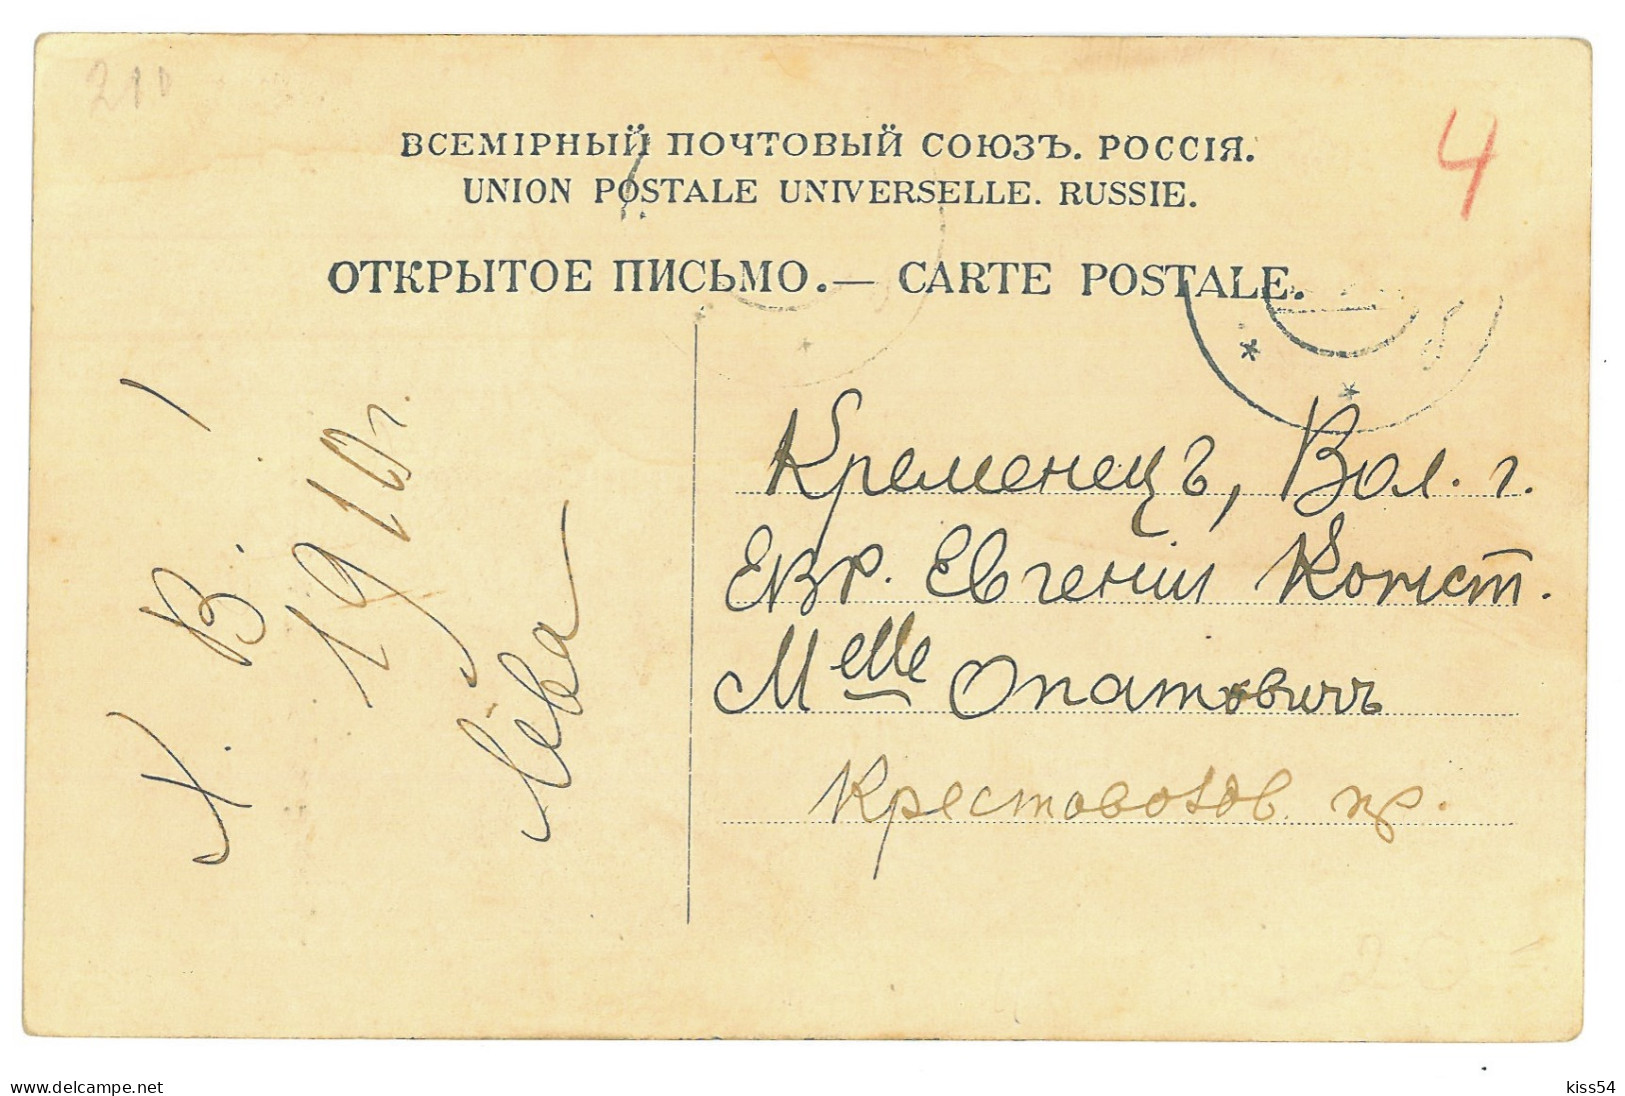 UK 40 - 17411 JITOMIR, Church, Ukraine - Old Postcard - Used - 1910 - Ukraine